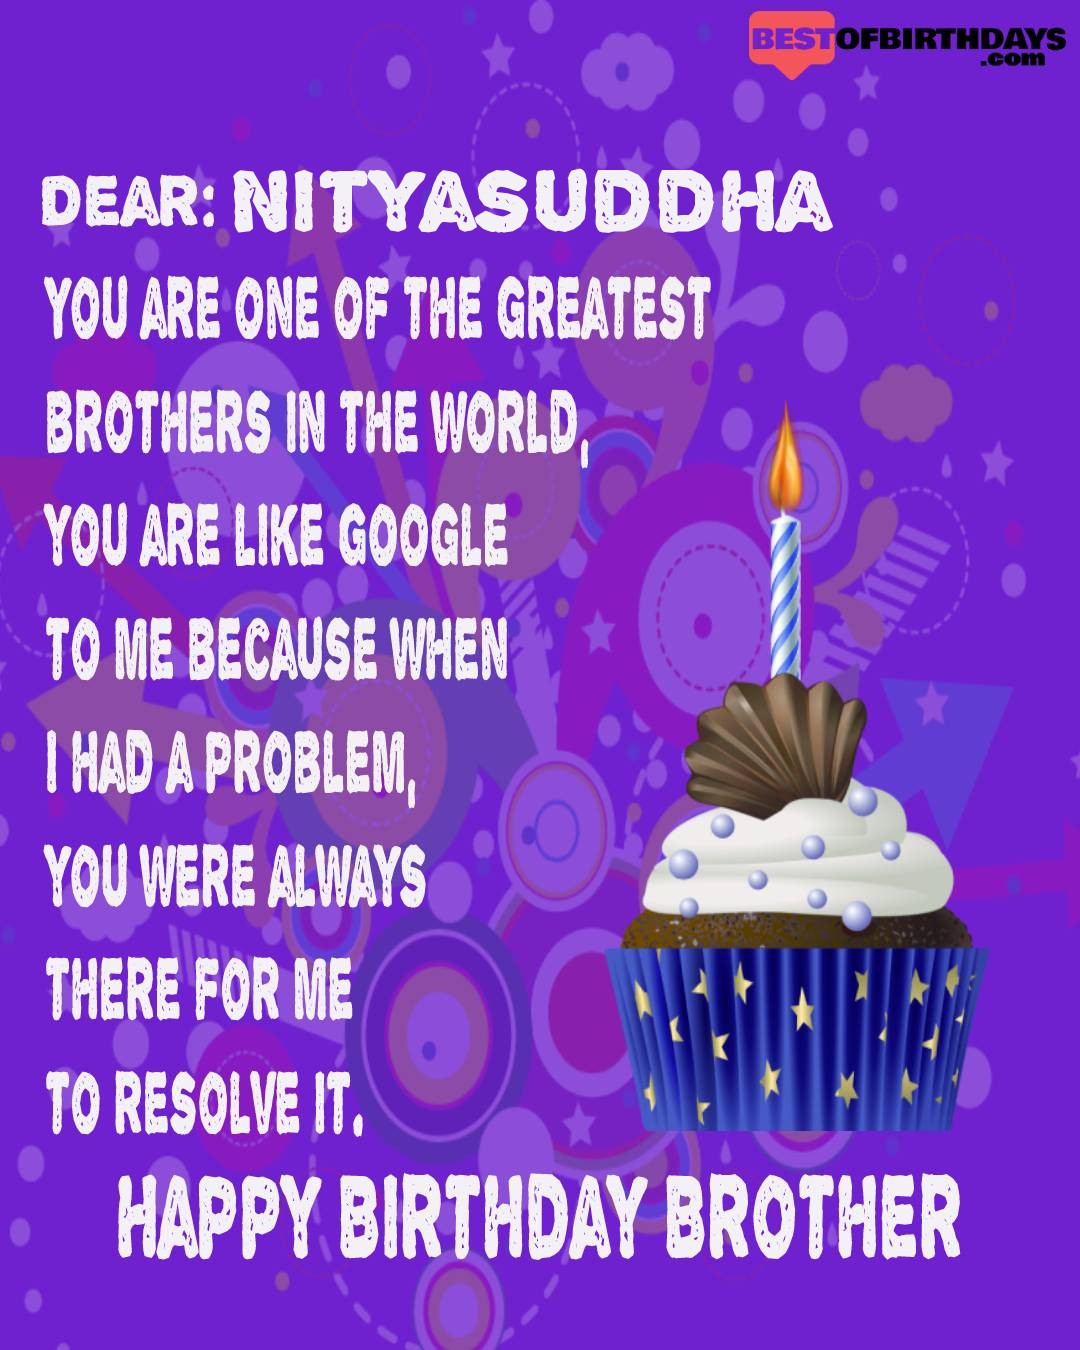 Happy birthday nityasuddha bhai brother bro